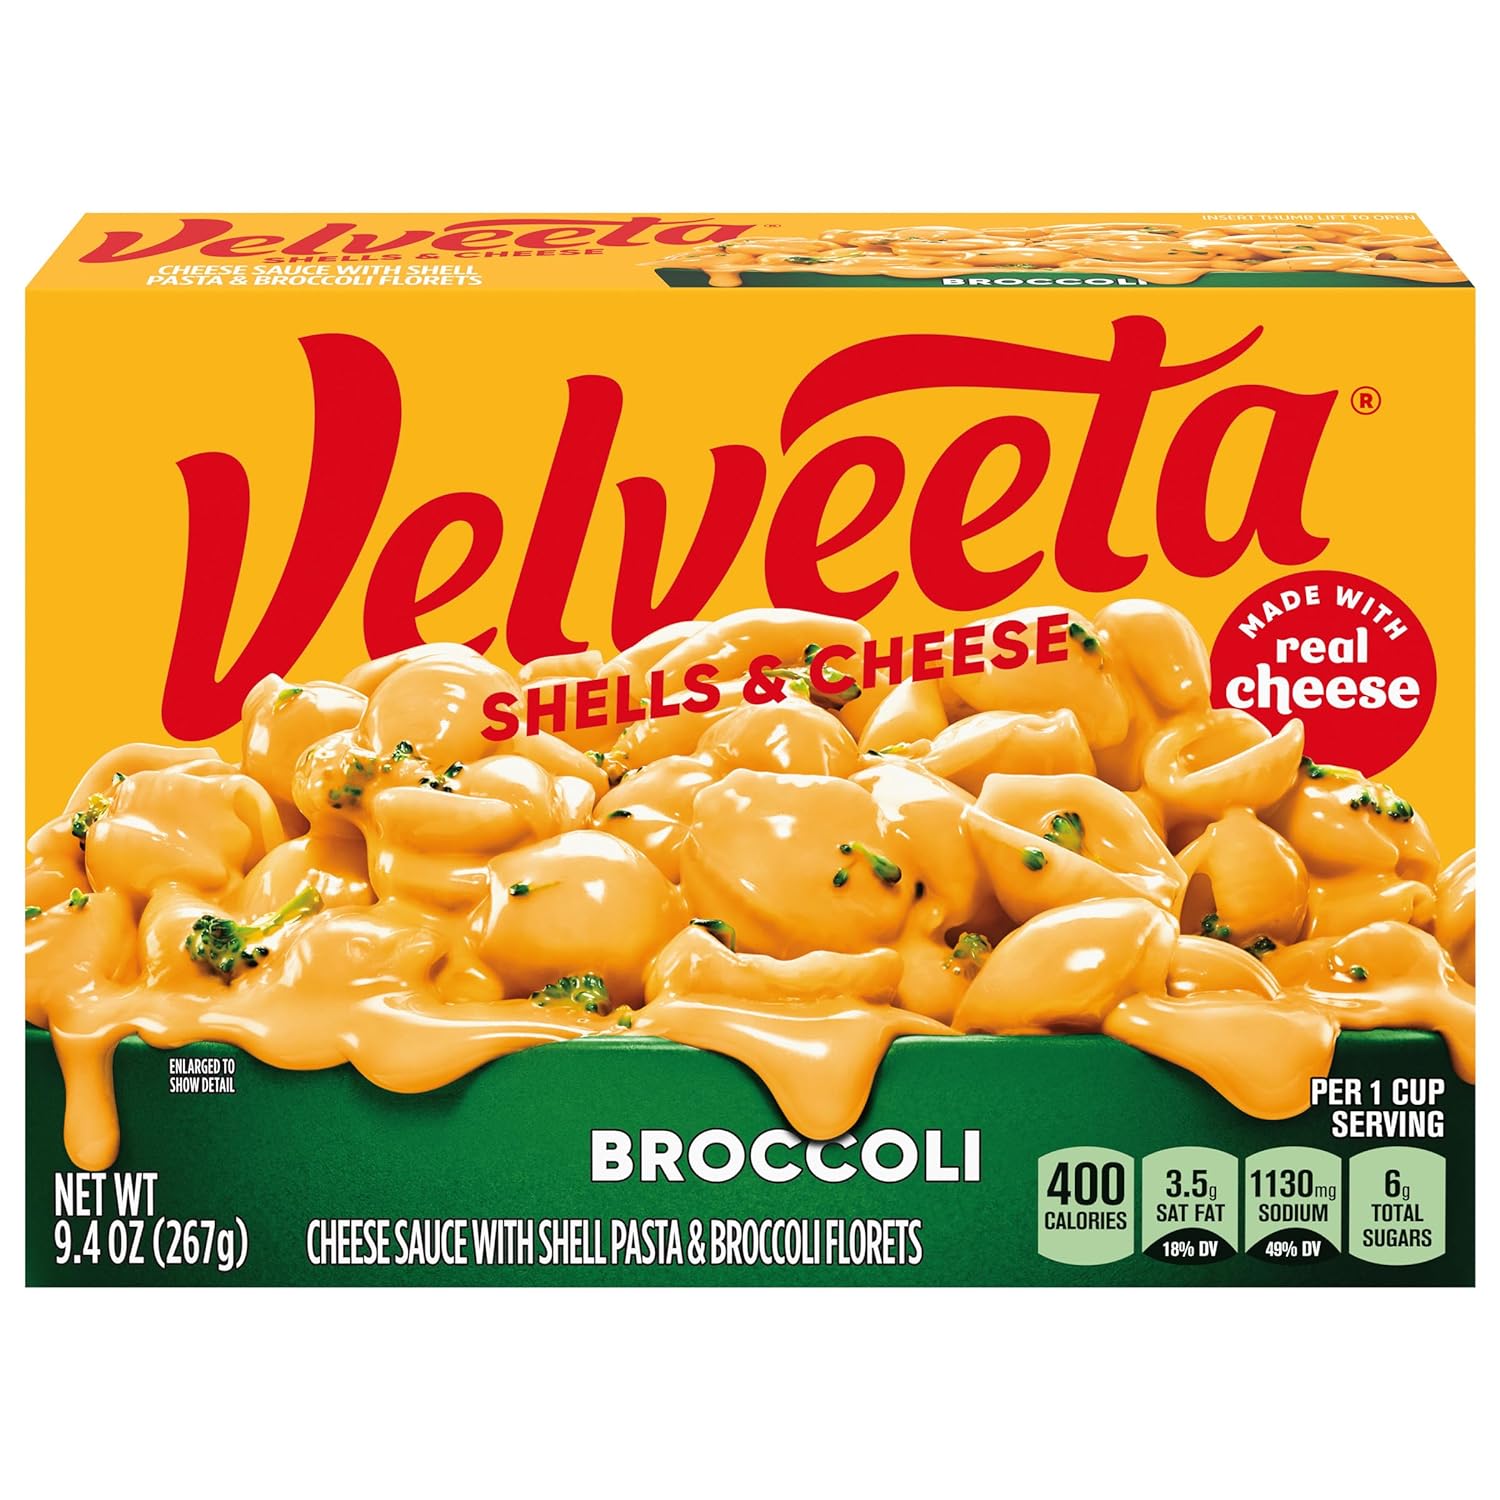 Velveeta Shells & Cheese with Broccoli Florets (9.4 oz Box)